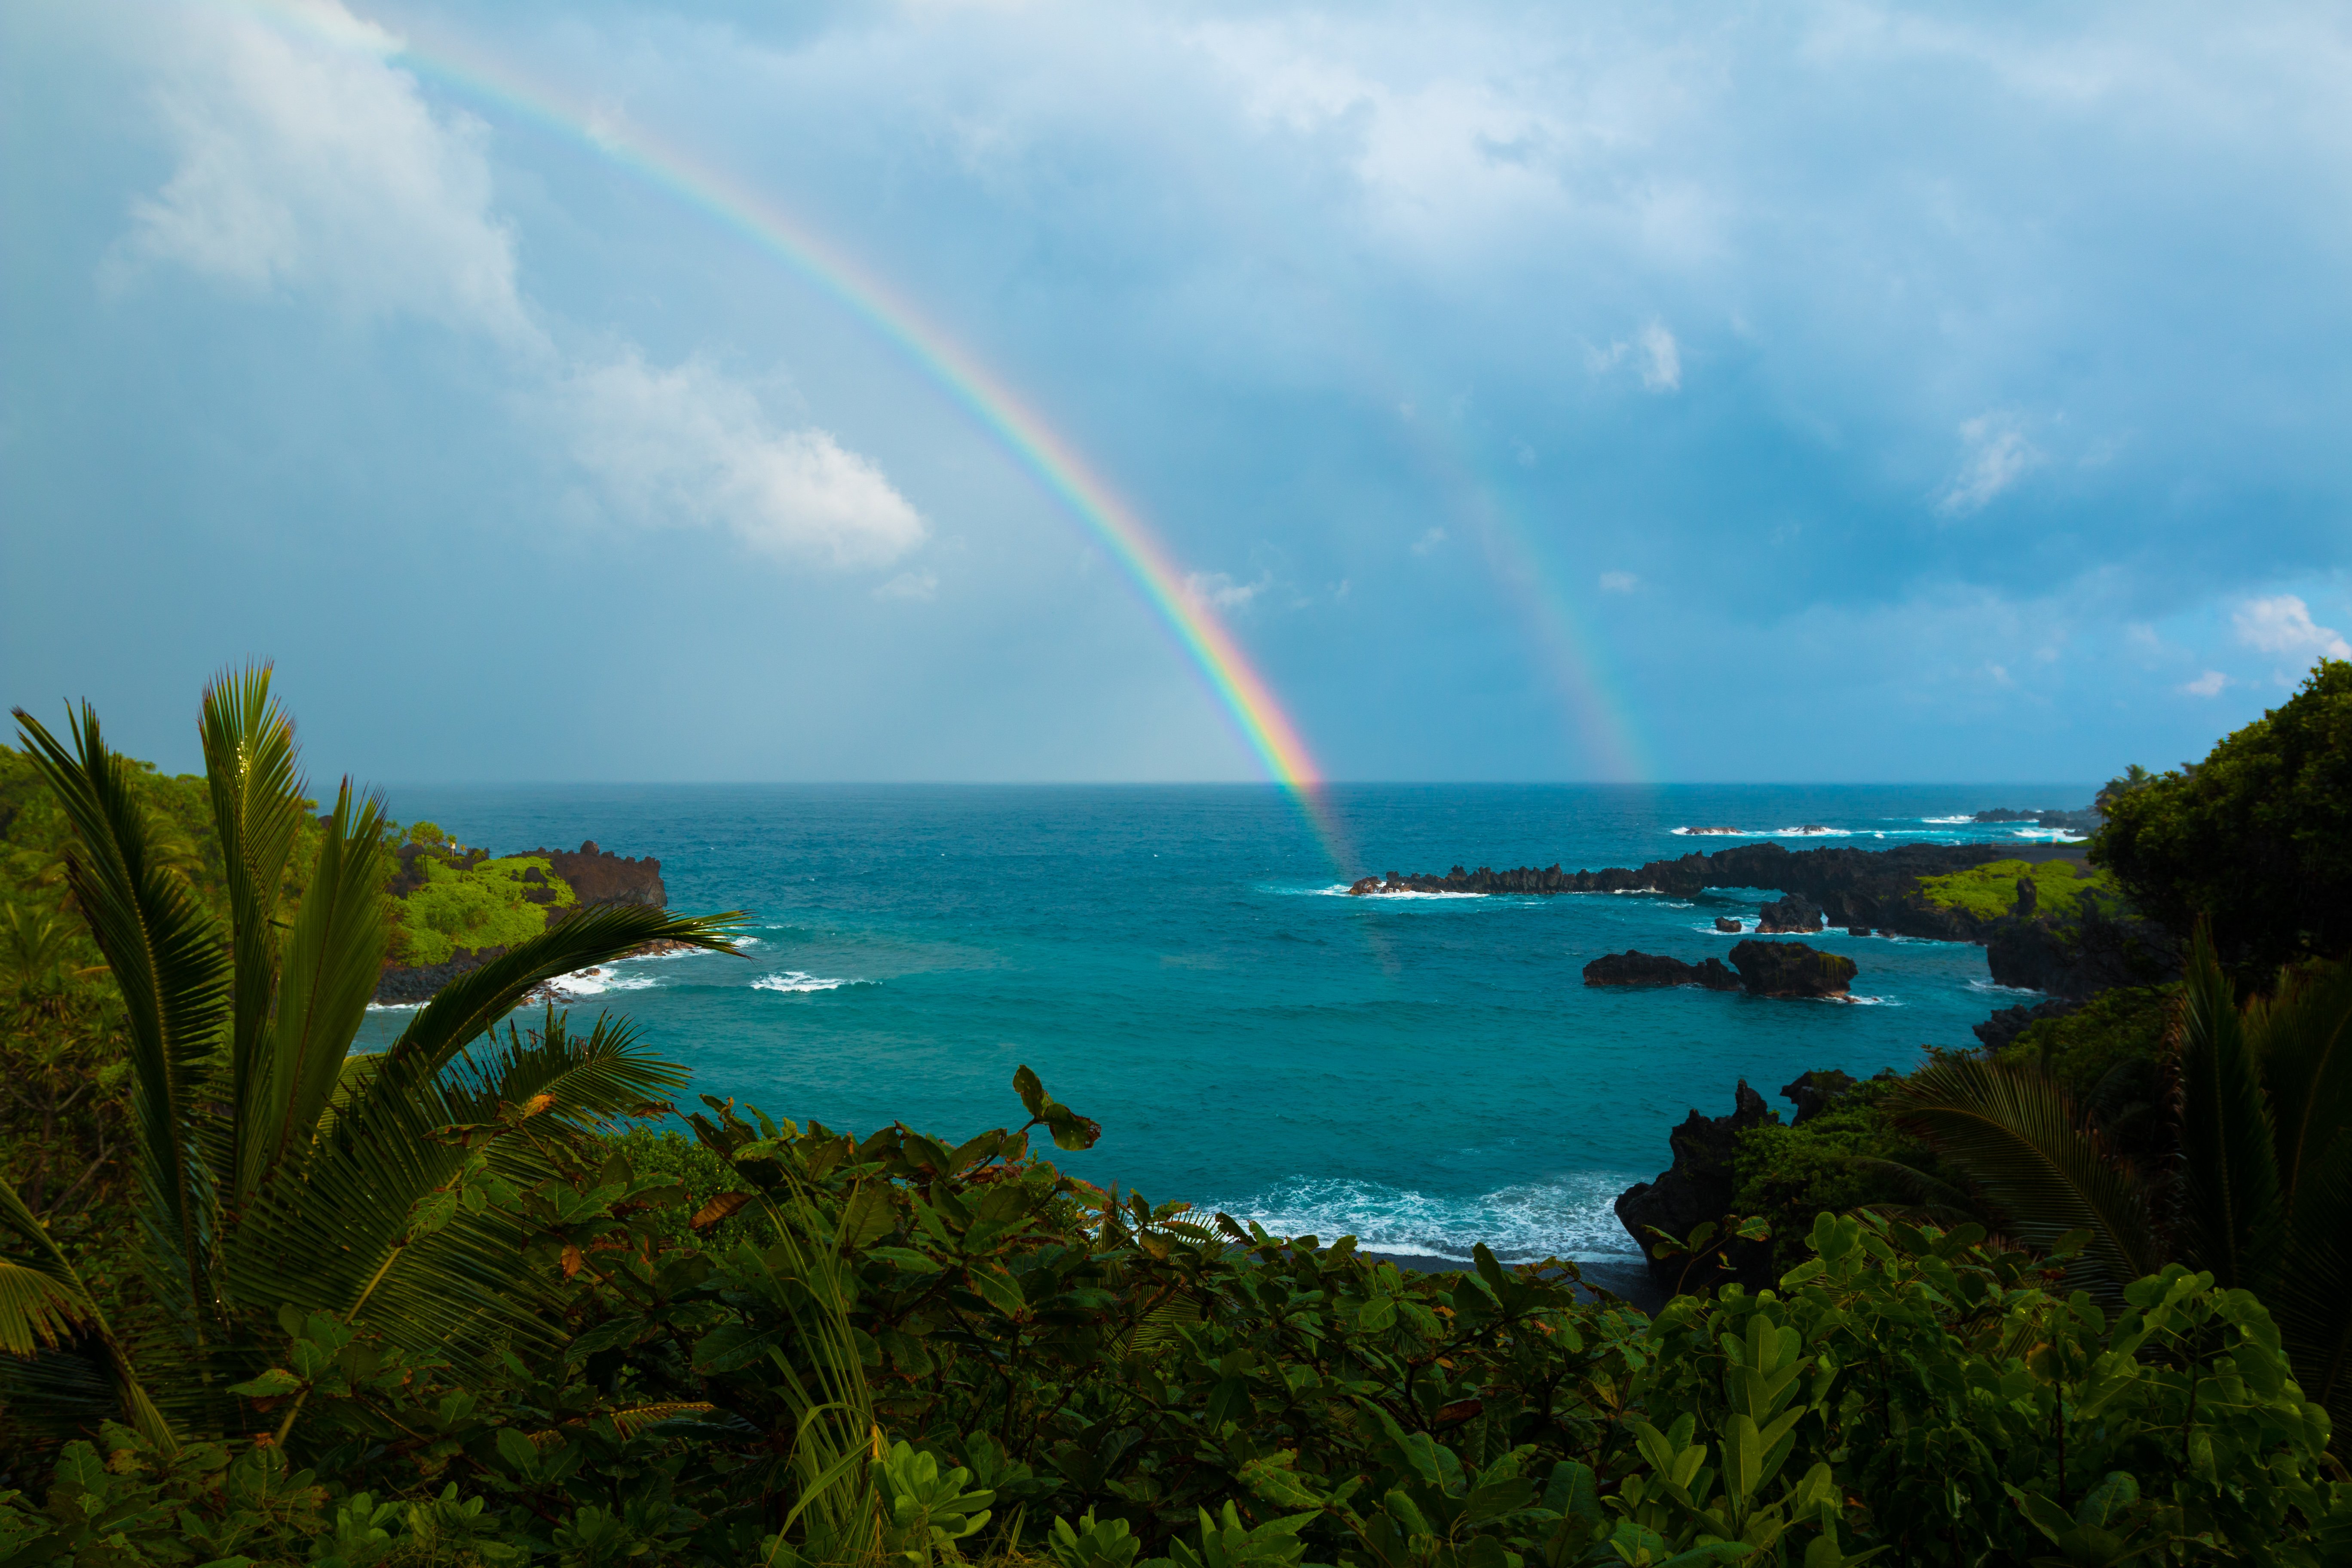 740205 descargar imagen tierra/naturaleza, arco iris, hawai, horizonte, naturaleza, océano, palmera, arbusto, tropico: fondos de pantalla y protectores de pantalla gratis